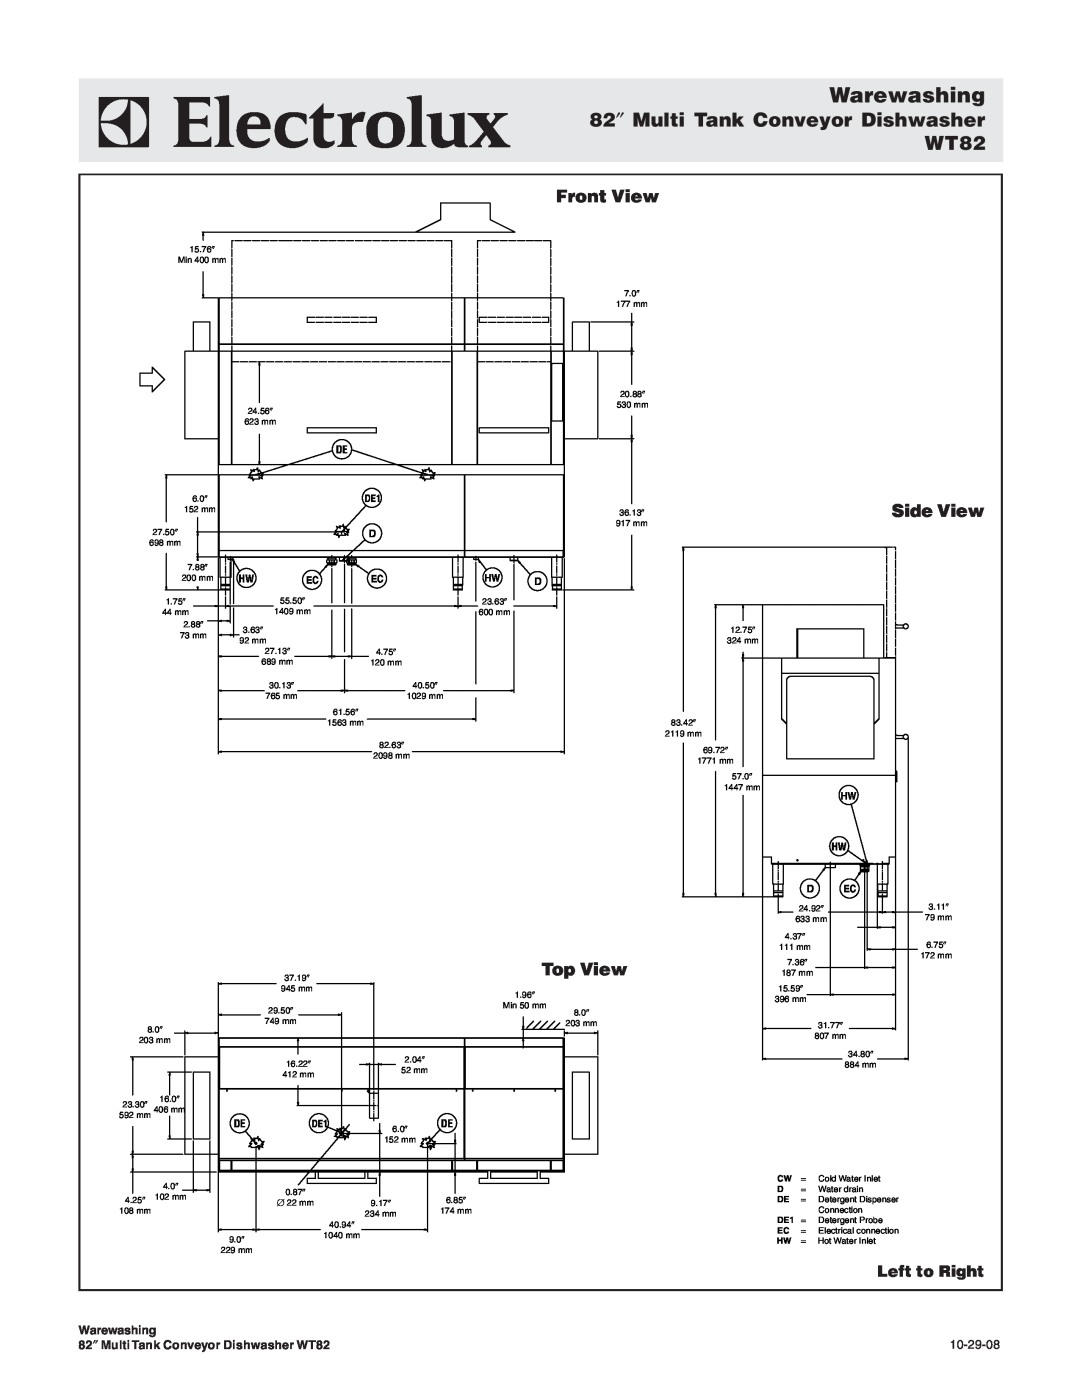 Electrolux WT82BR208 82″ Multi Tank Conveyor Dishwasher WT82, Front View, Side View, Top View, Warewashing, 10-29-08, $%  